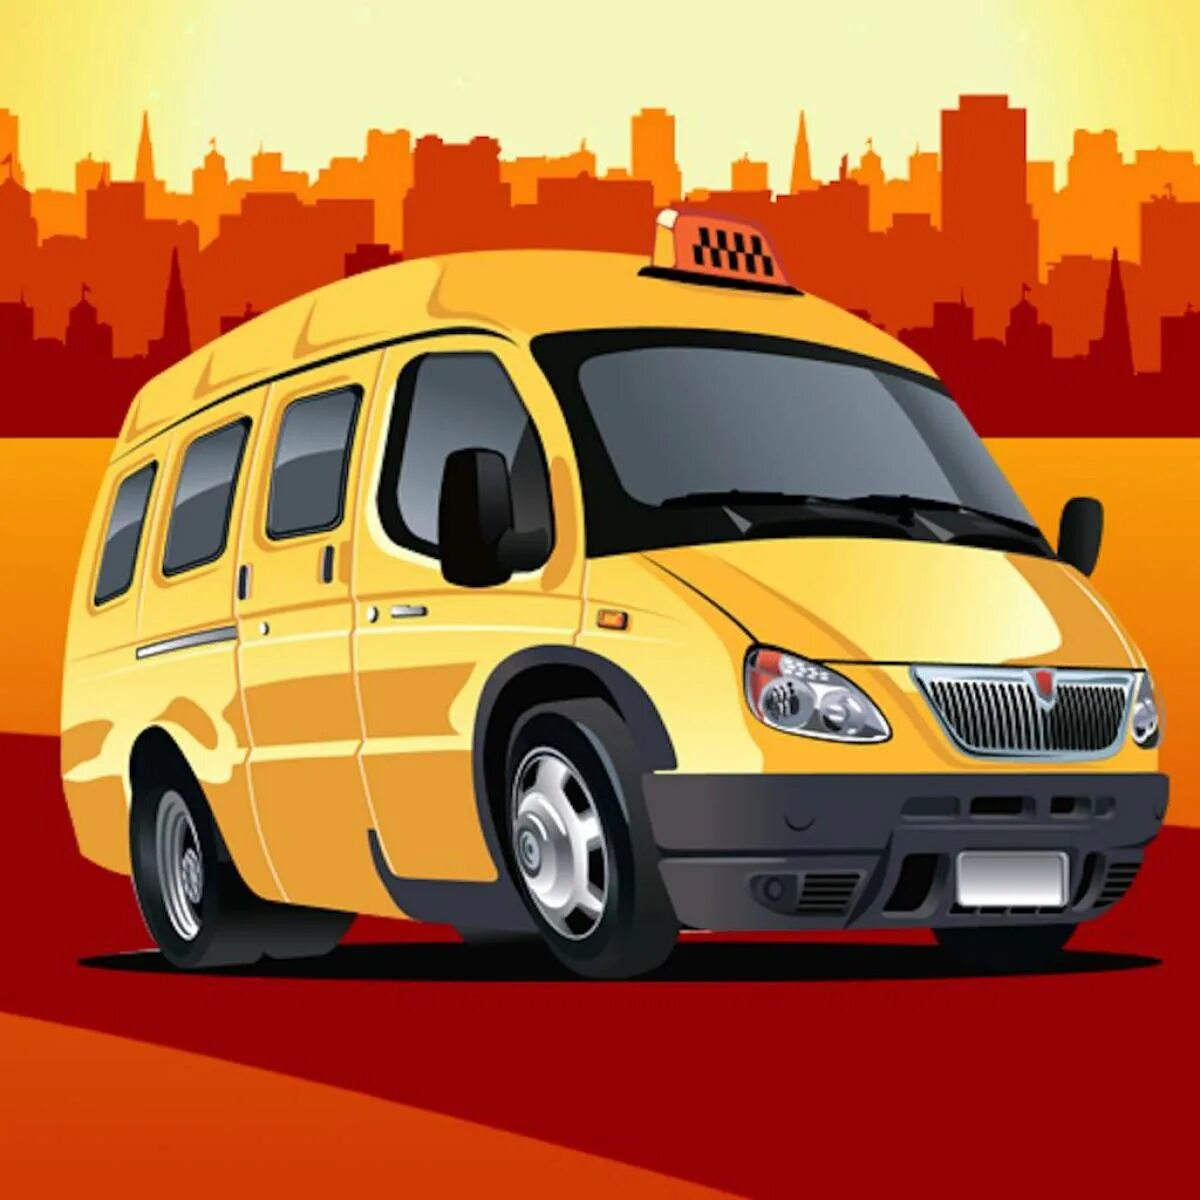 Найти маршрутное такси. Маршрутное такси. Газель маршрутное такси. Микроавтобус маршрутное такси. Газель такси.